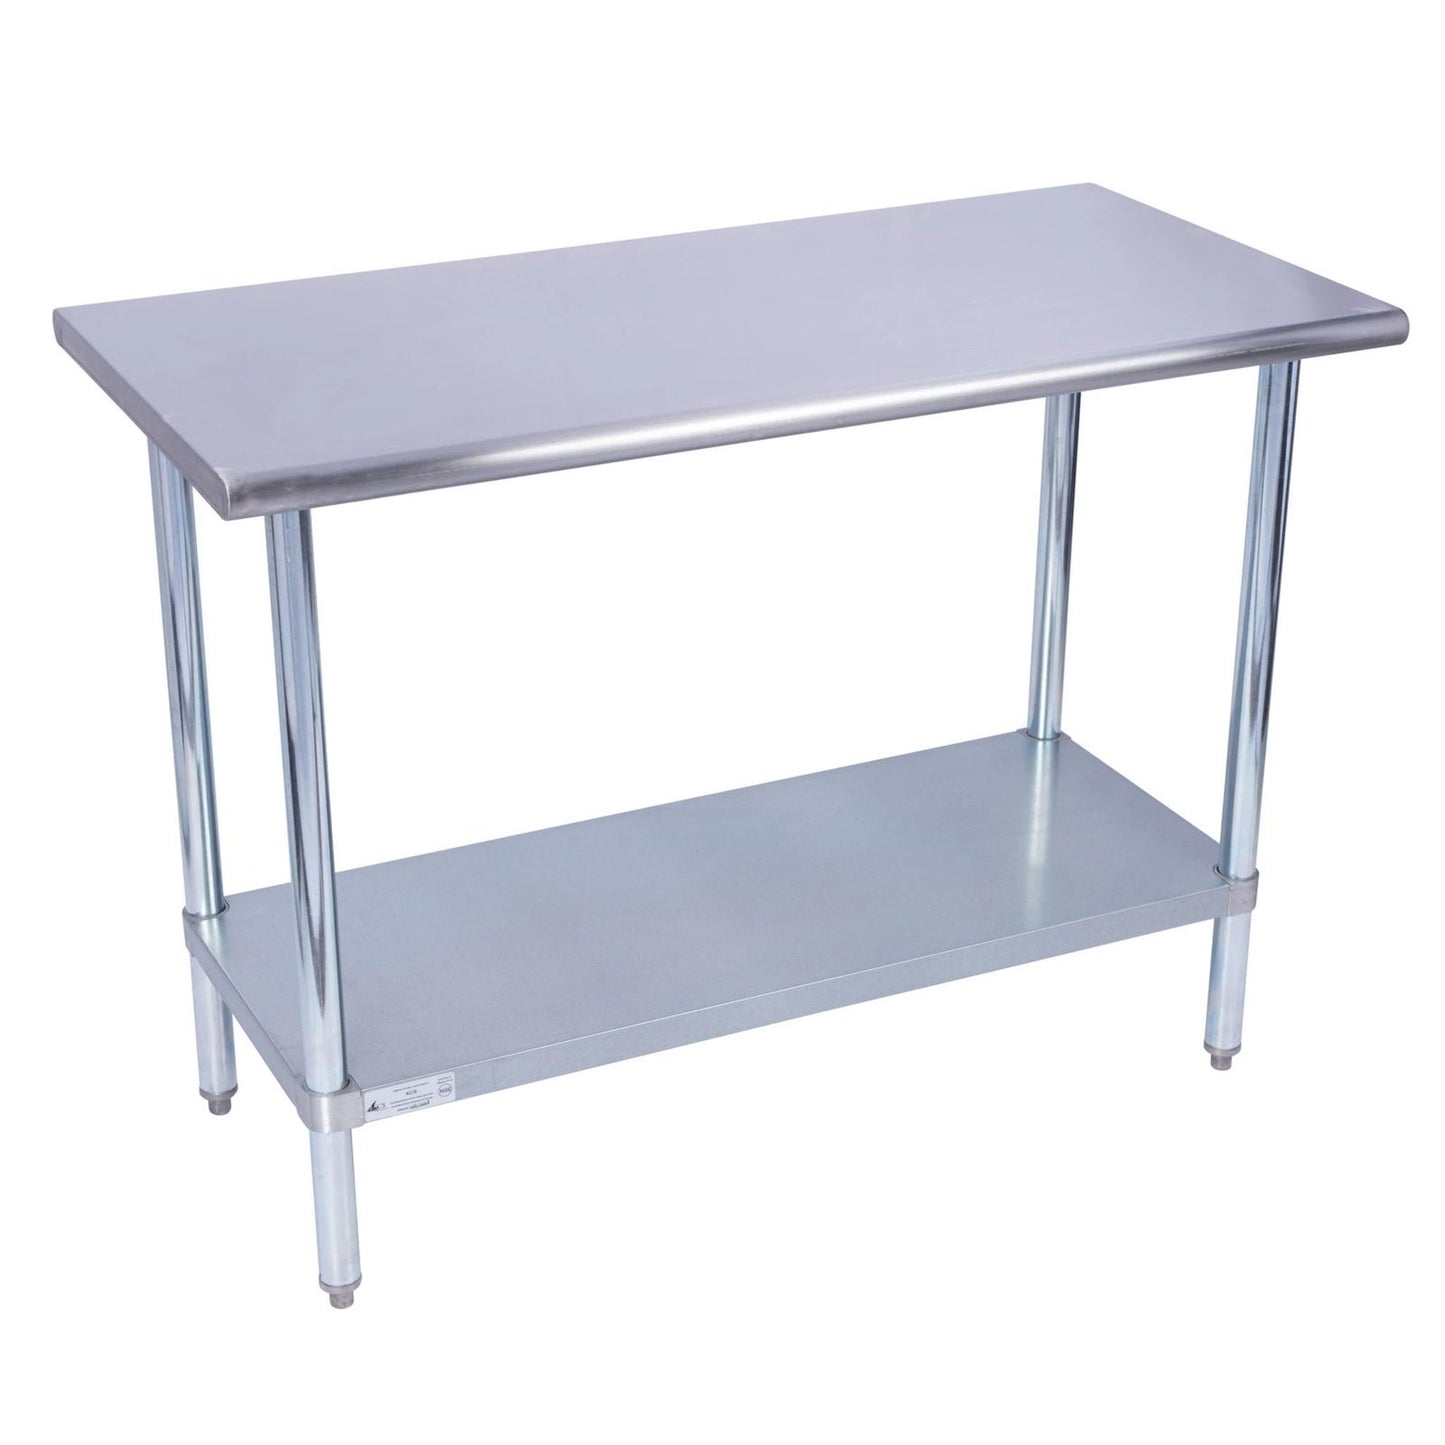 KCS 24″x 72″ Stainless Steel Work Tables with Galvanized Undershelf